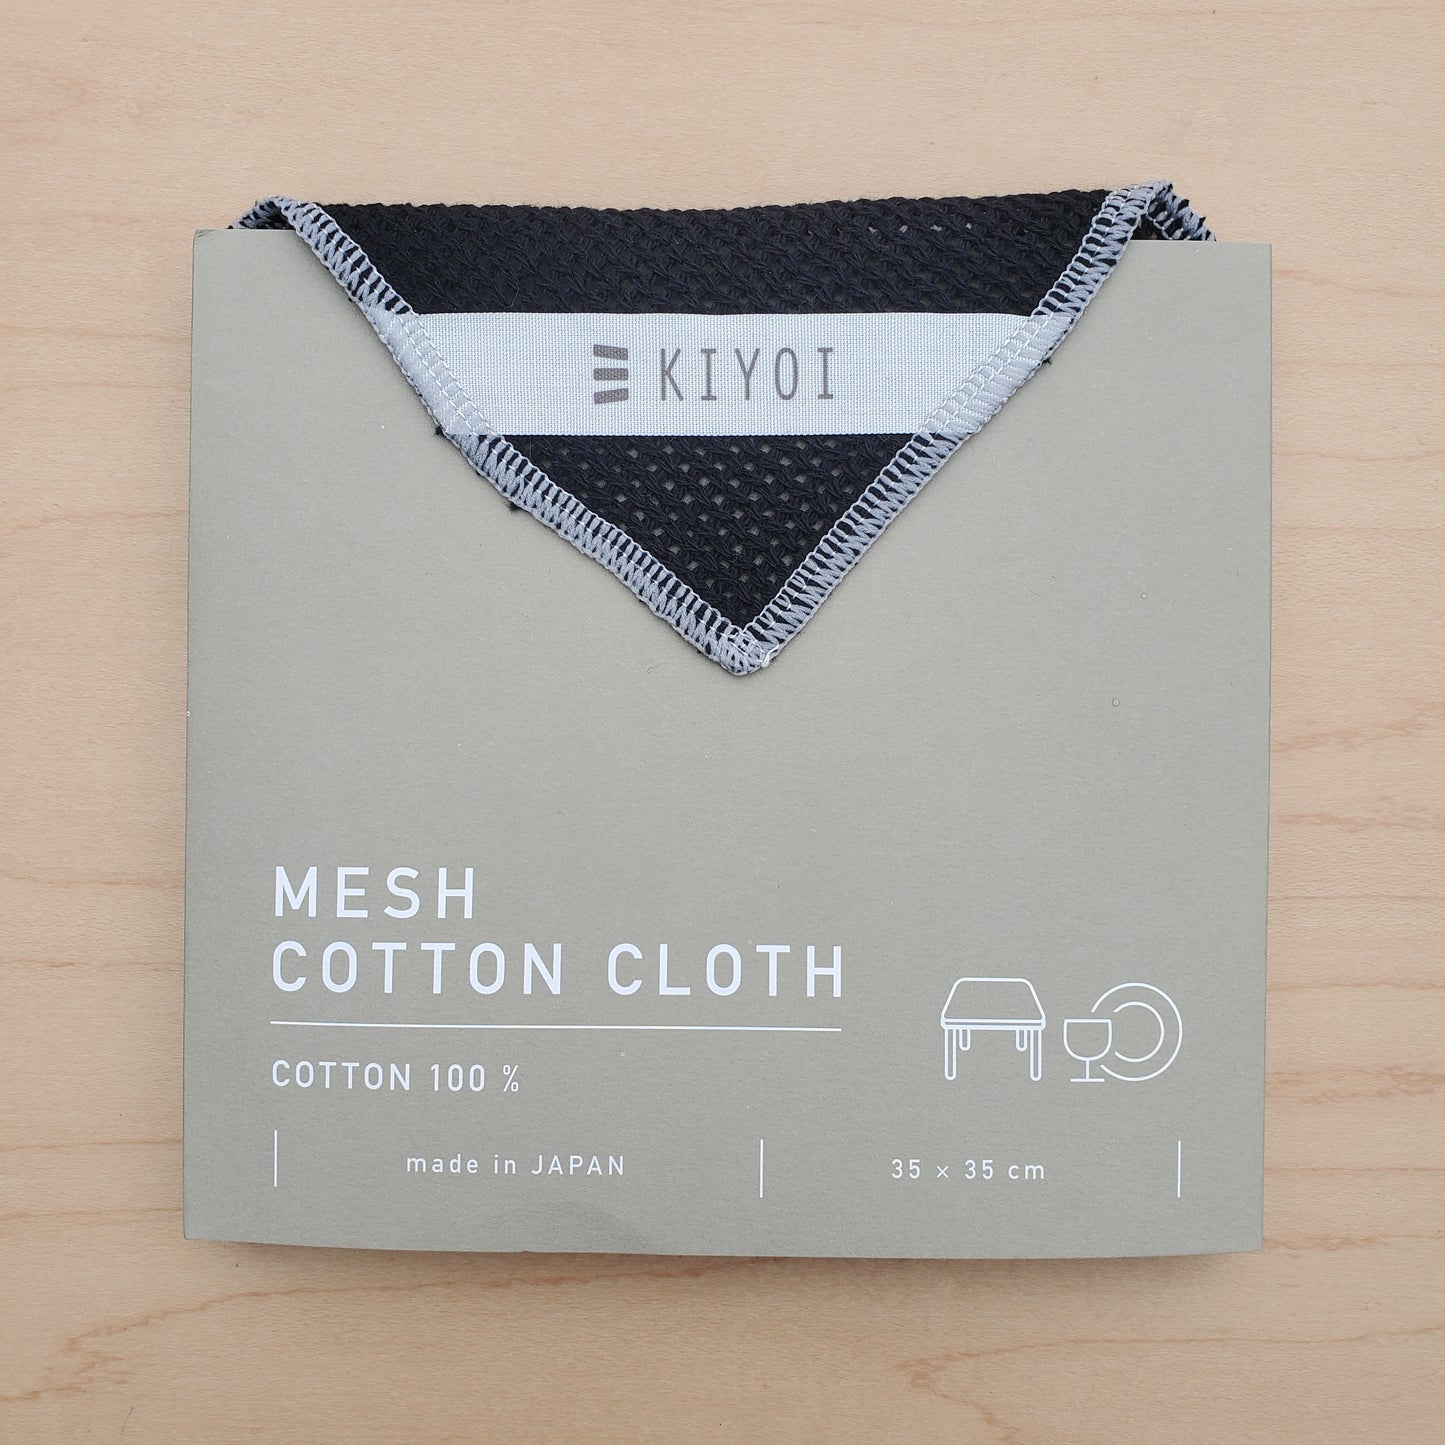 Kiyoi Mesh Cotton Dish Cloth